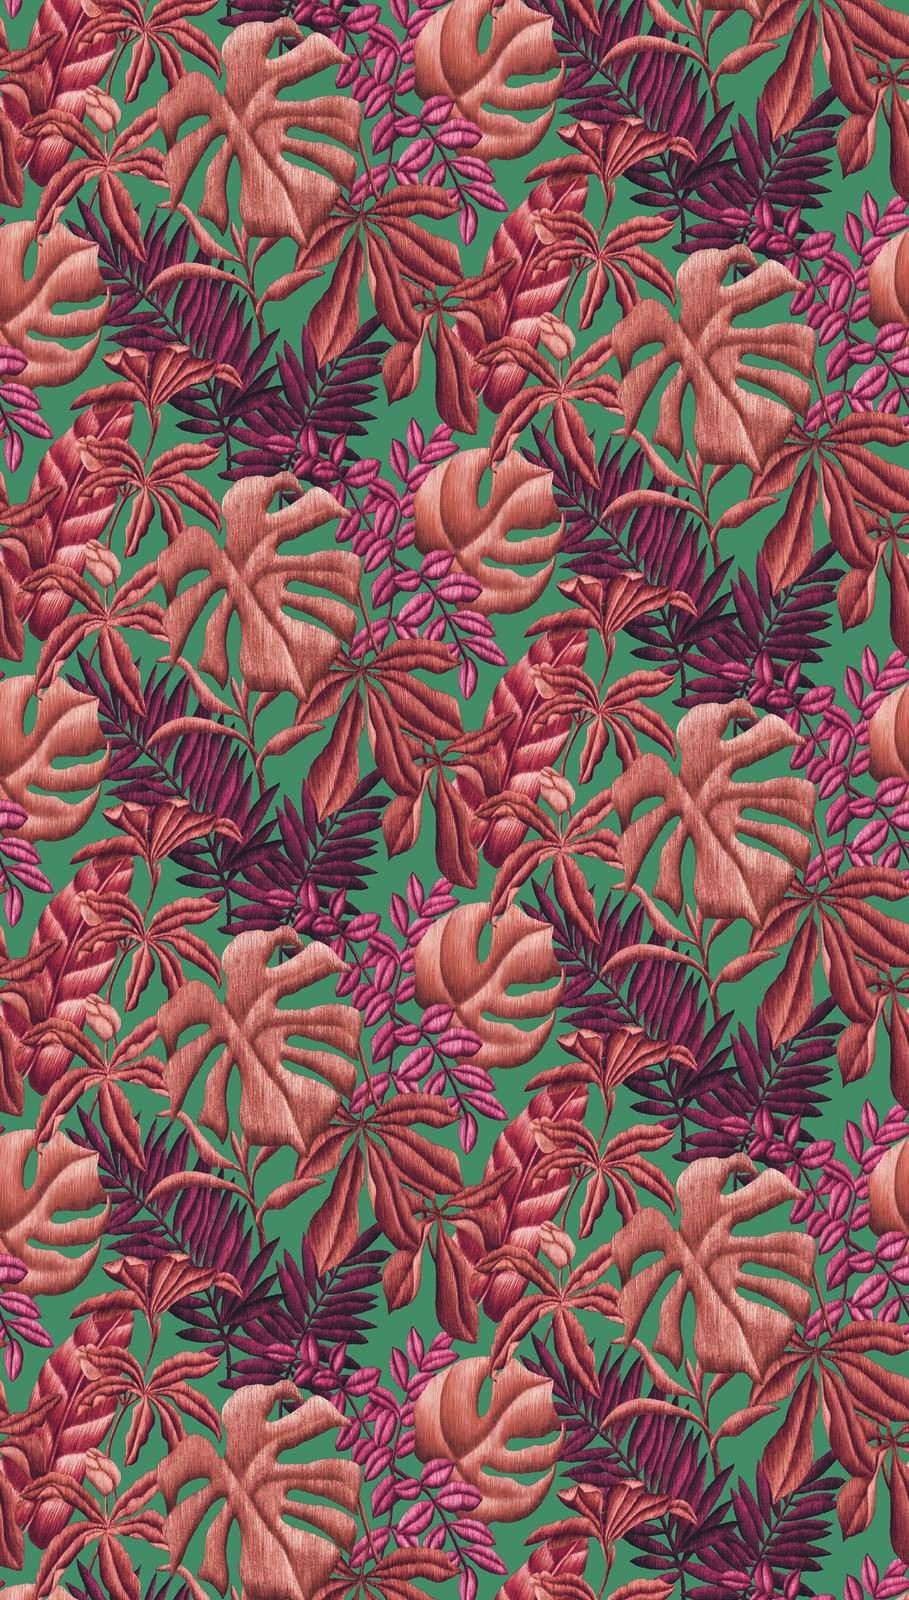             Tapete mit großflächigen Blattmuster Farn & Bananenblätter – Rot, Orange, Türkis
        